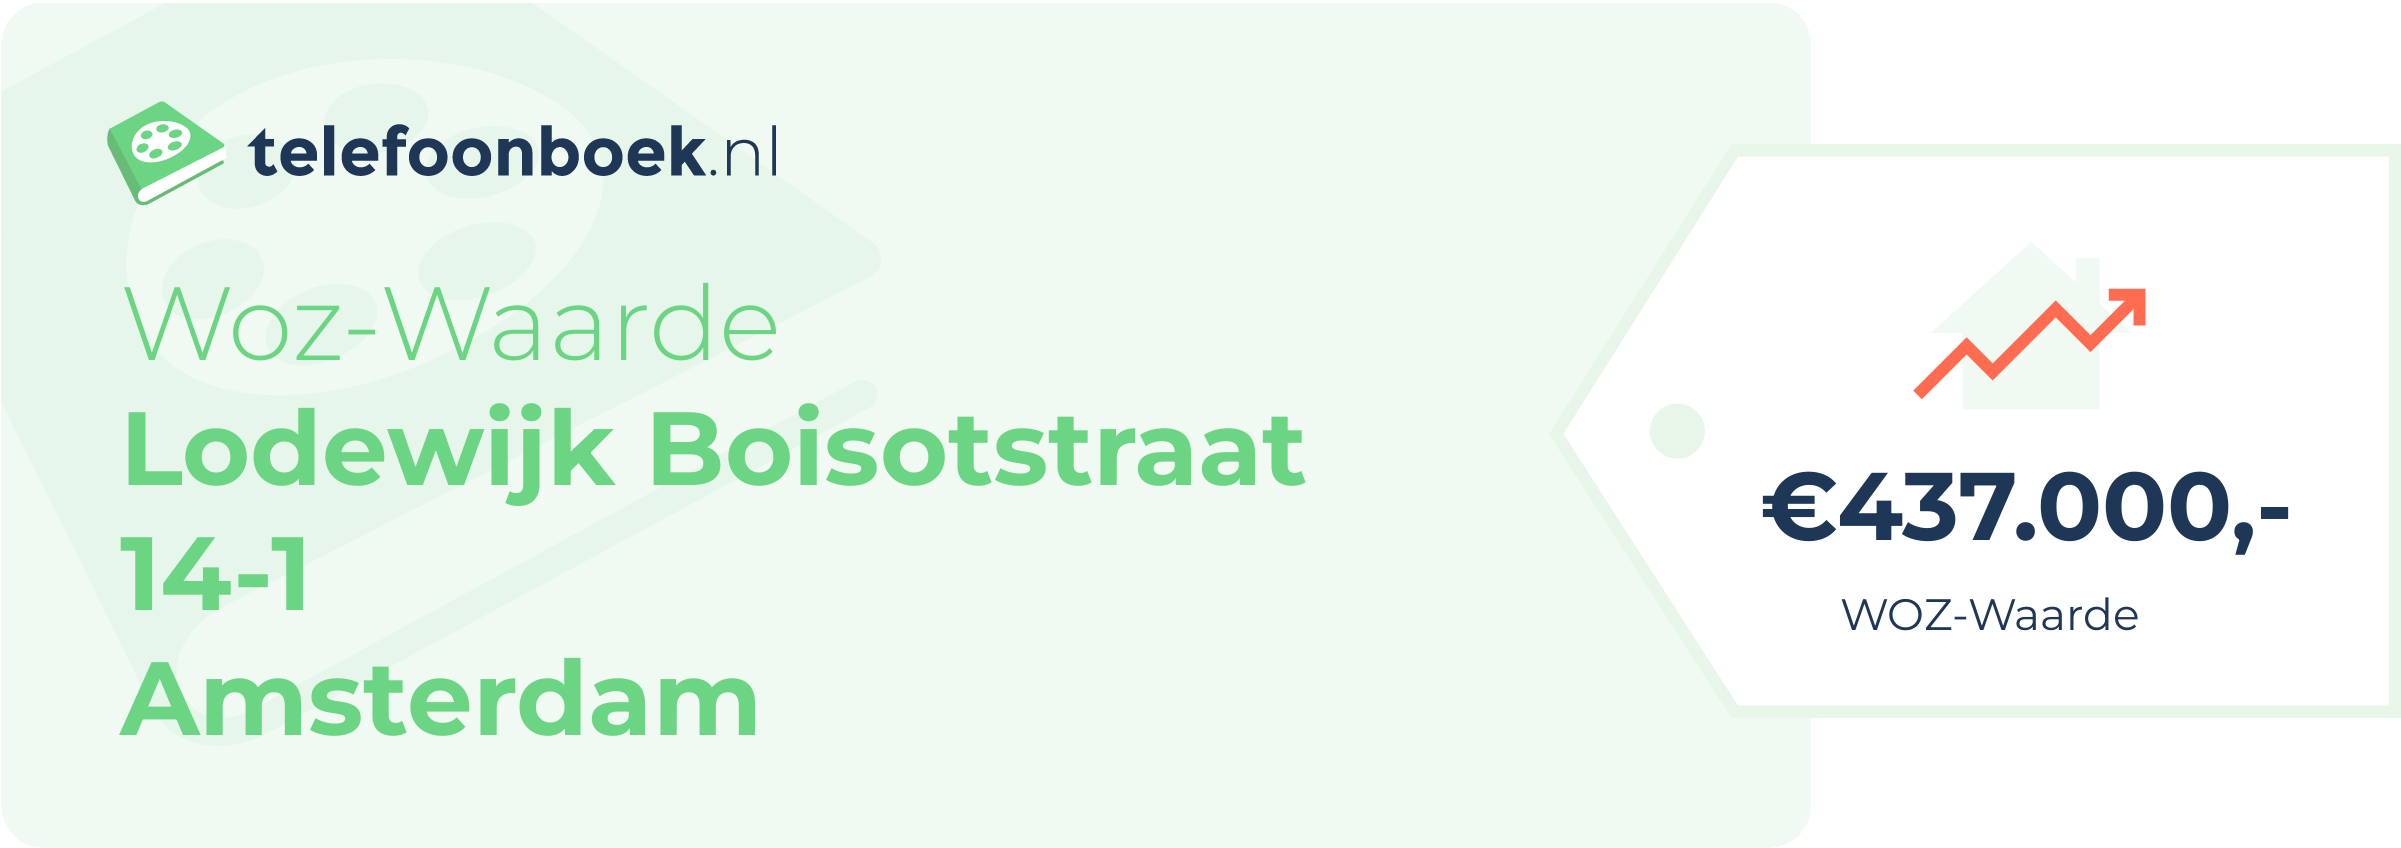 WOZ-waarde Lodewijk Boisotstraat 14-1 Amsterdam